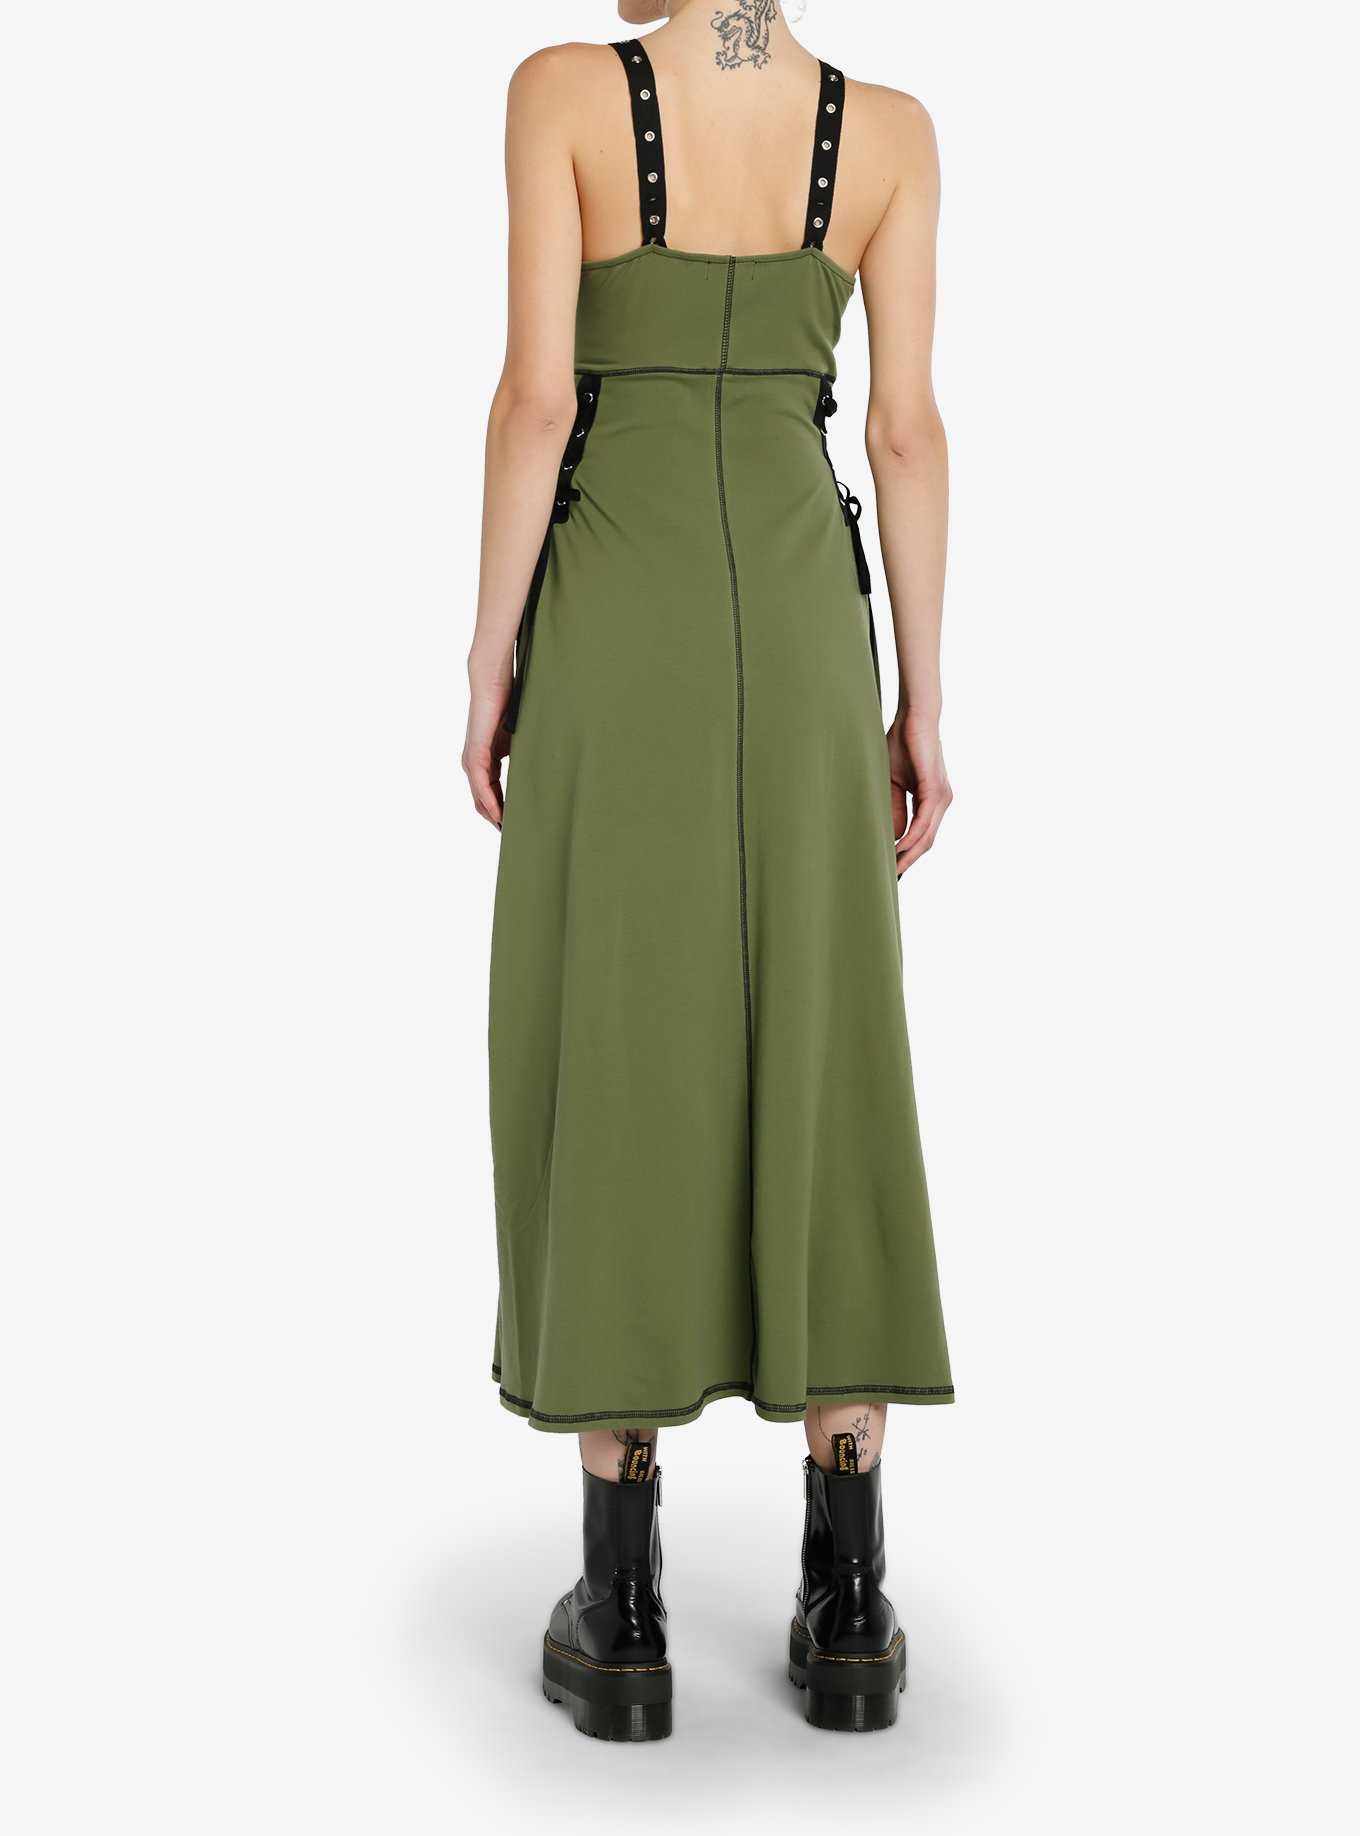 Social Collision® Green & Black Lace-Up Midaxi Dress, , hi-res